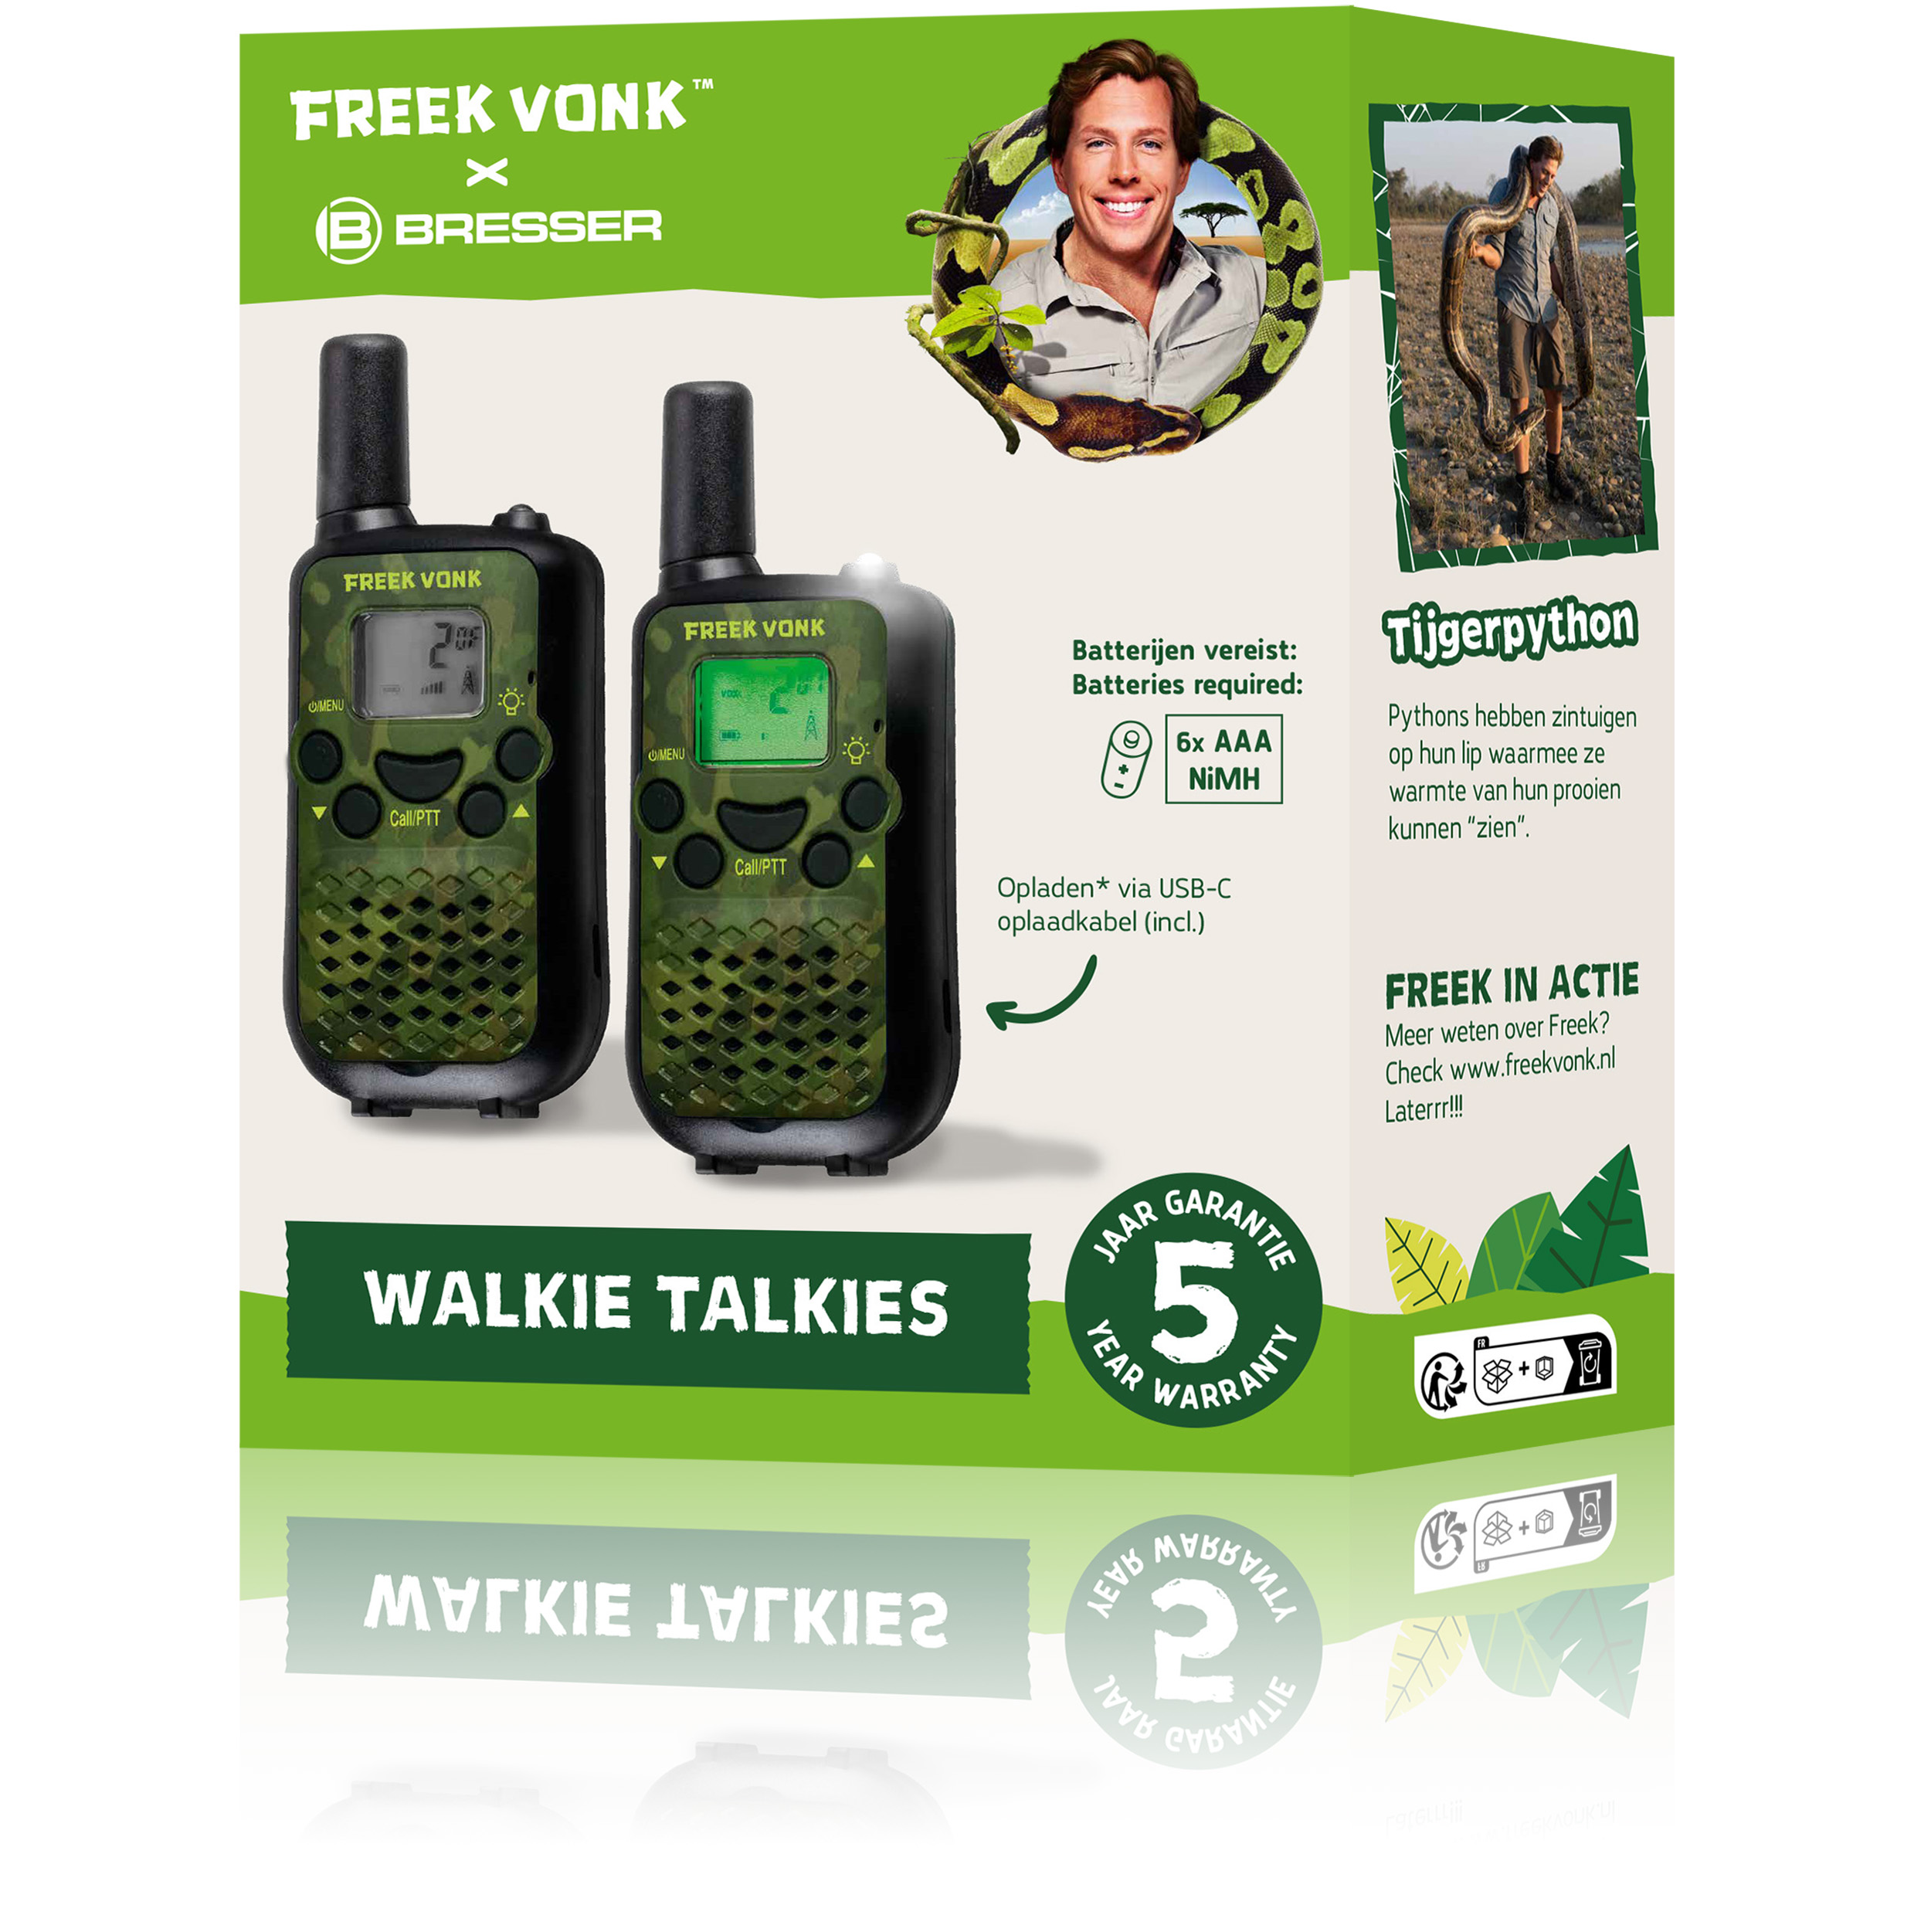 FREEK VONK x BRESSER Talkies-walkies